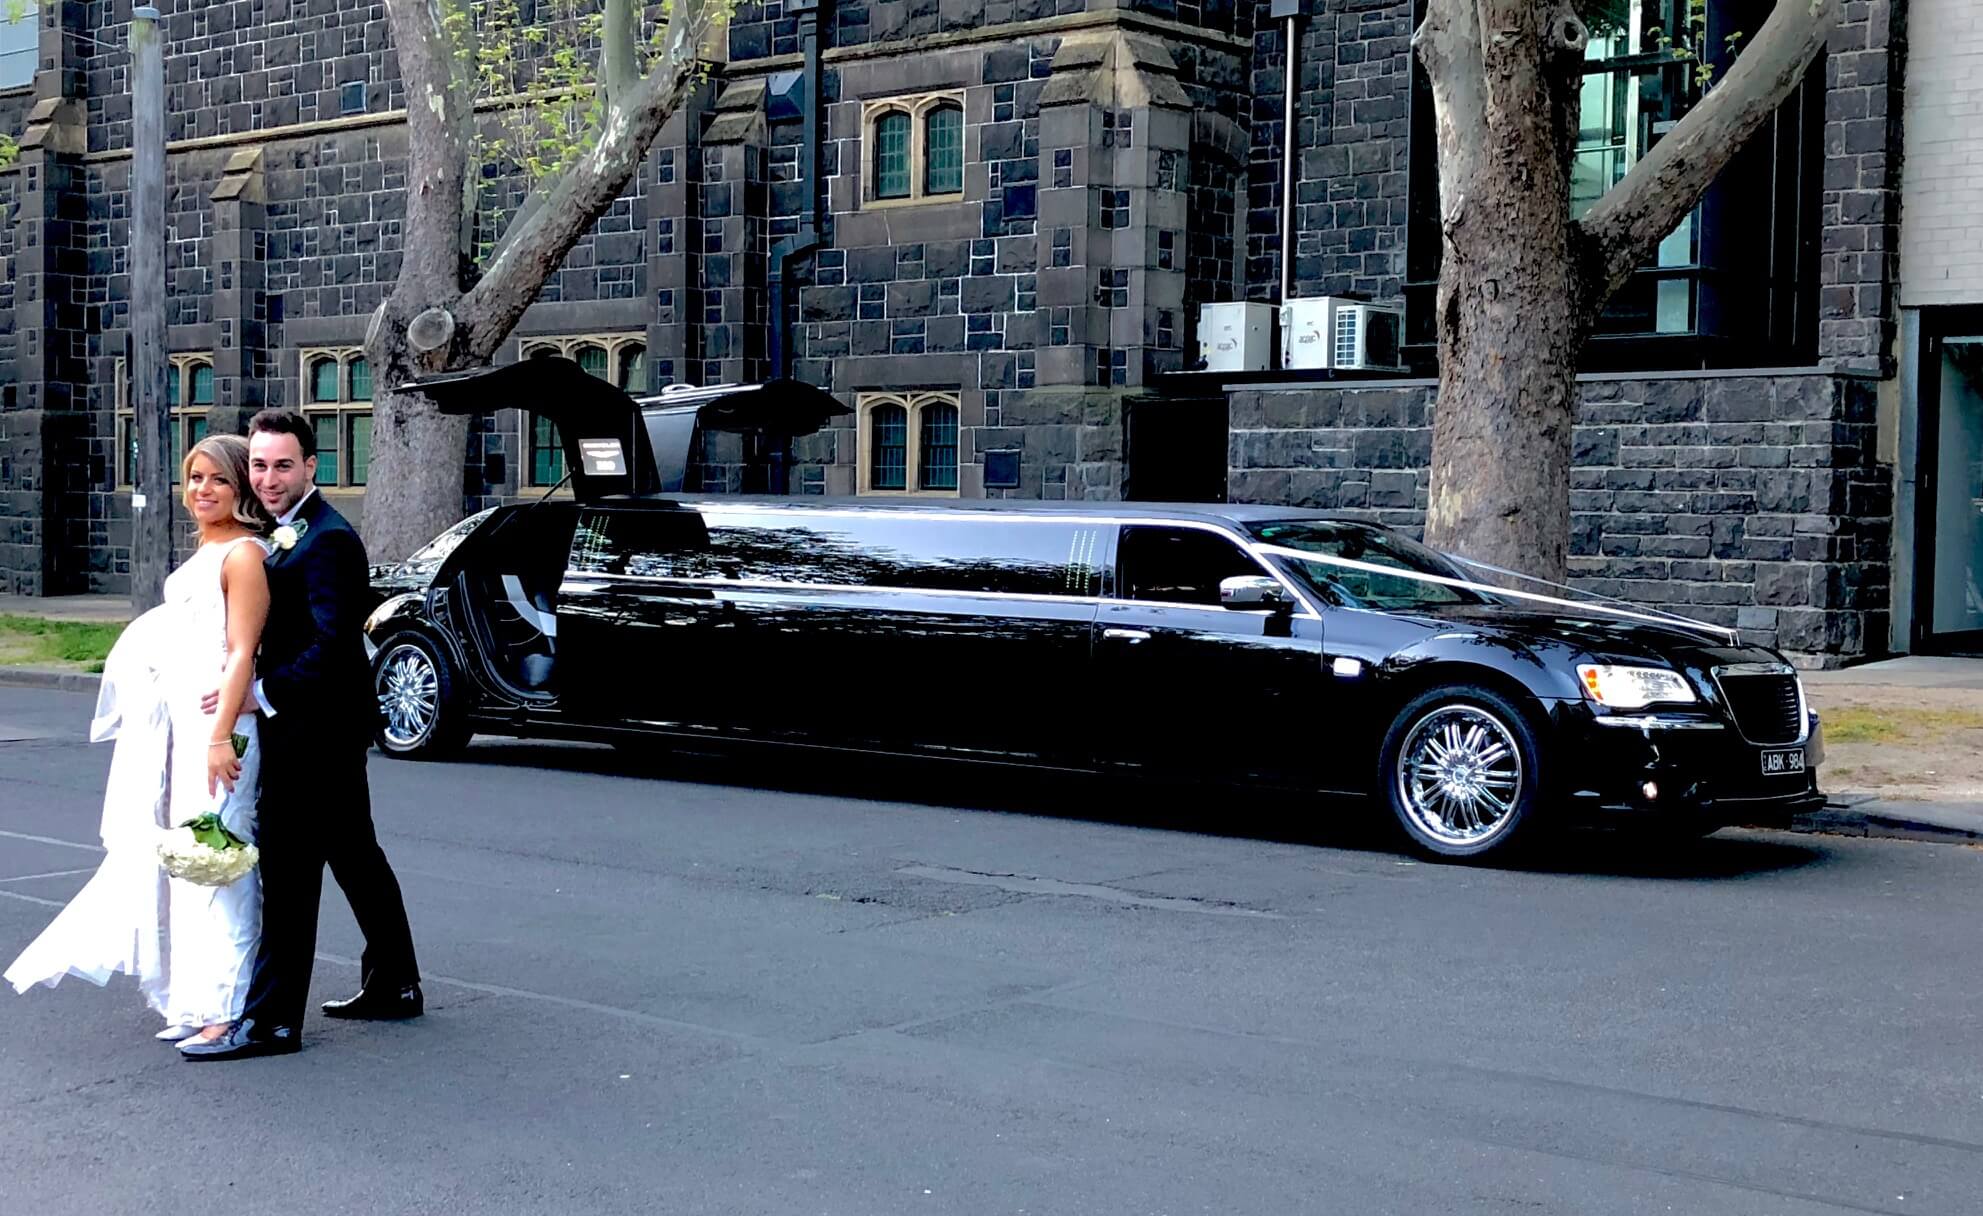 Stretch Black Chrysler luxury Wedding limousine hire